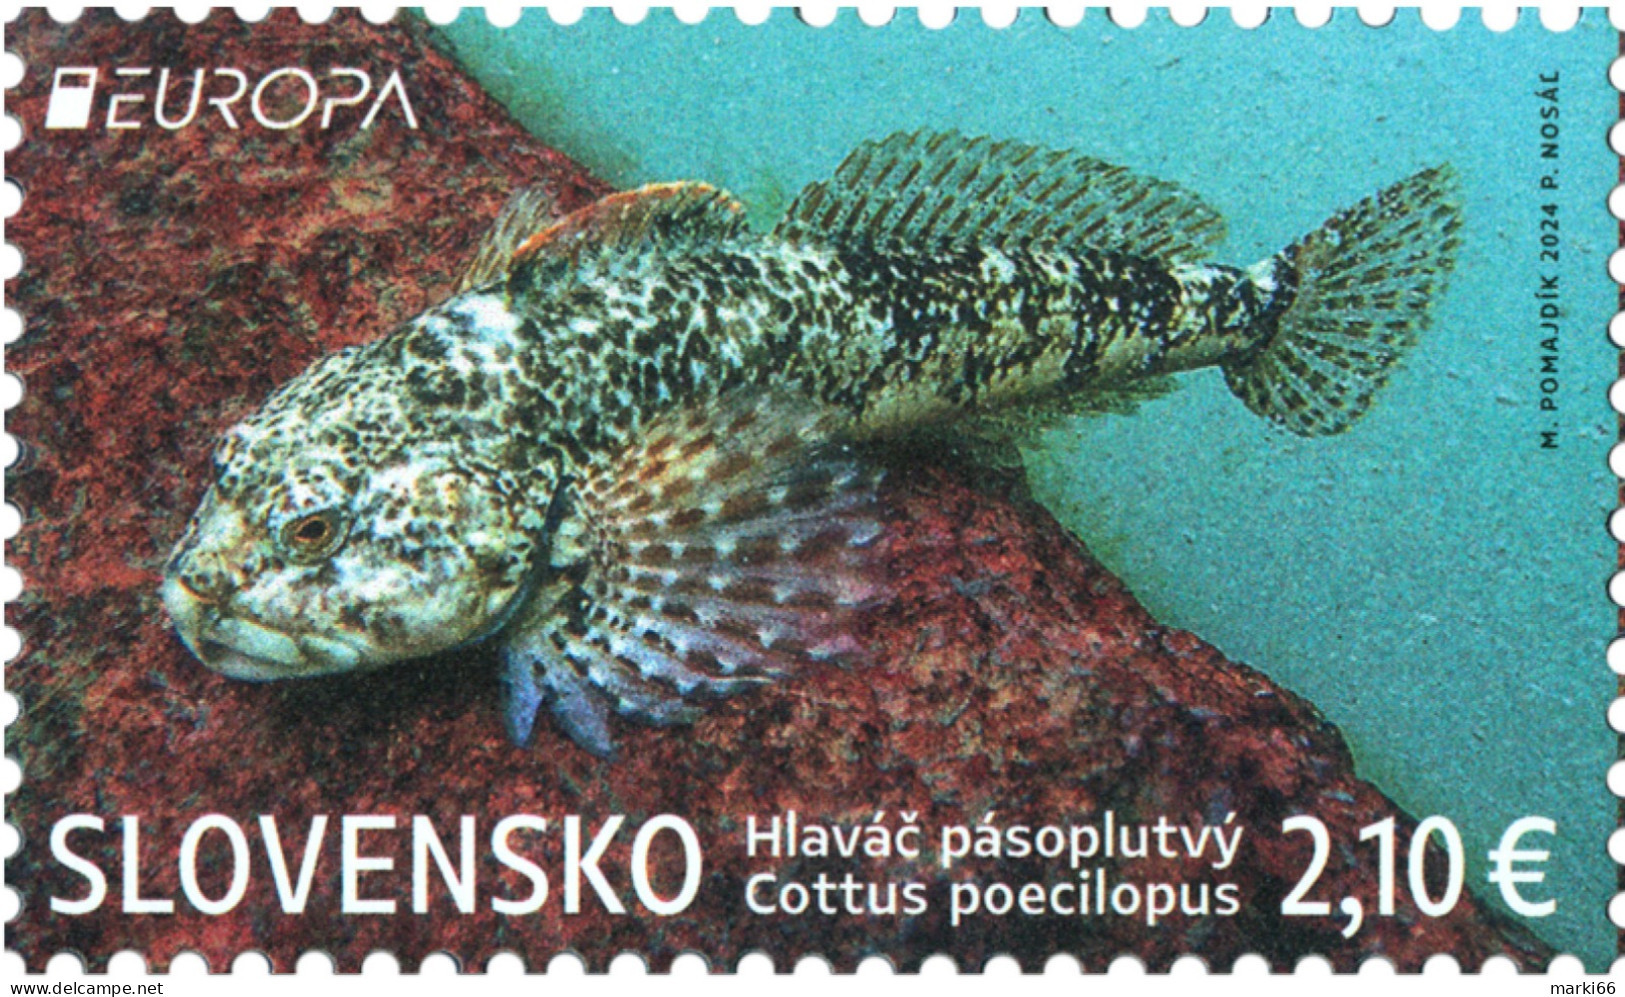 Slovakia - 2024 - Europa CEPT - Underwater Flora - Alpine Bullhead Fish - Mint Stamp - Nuevos